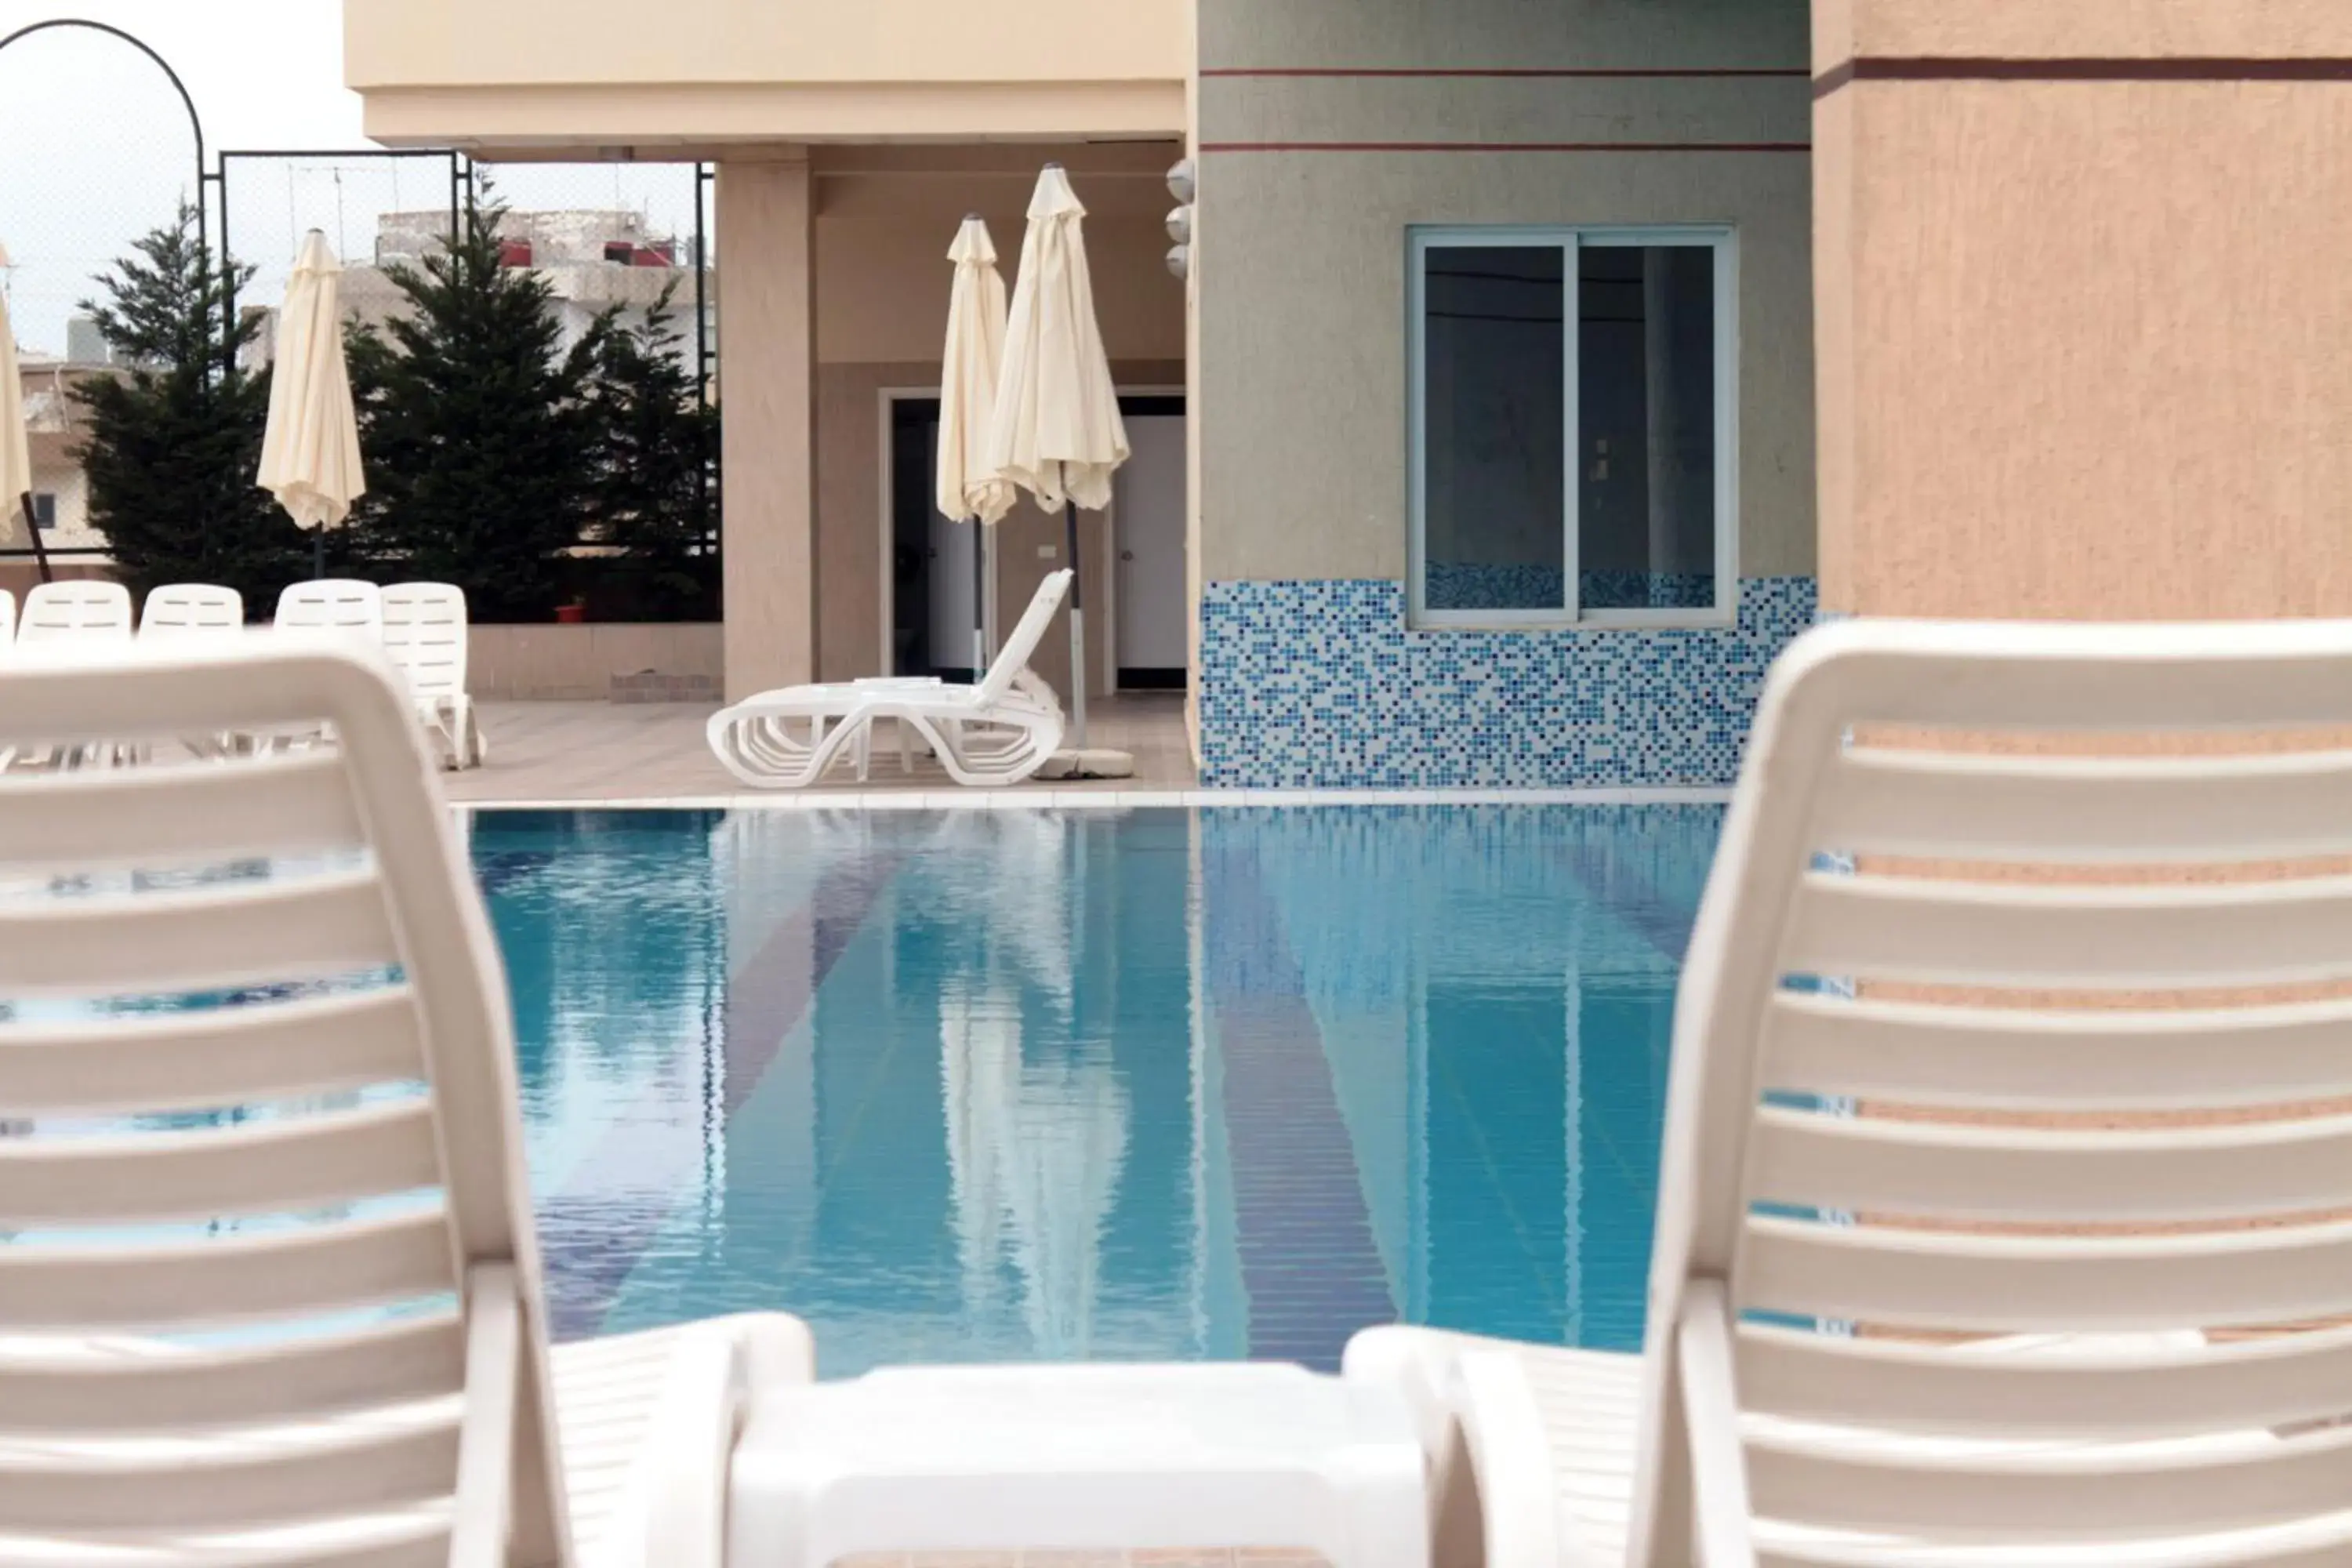 Swimming Pool in Cosmopolitan Hotel